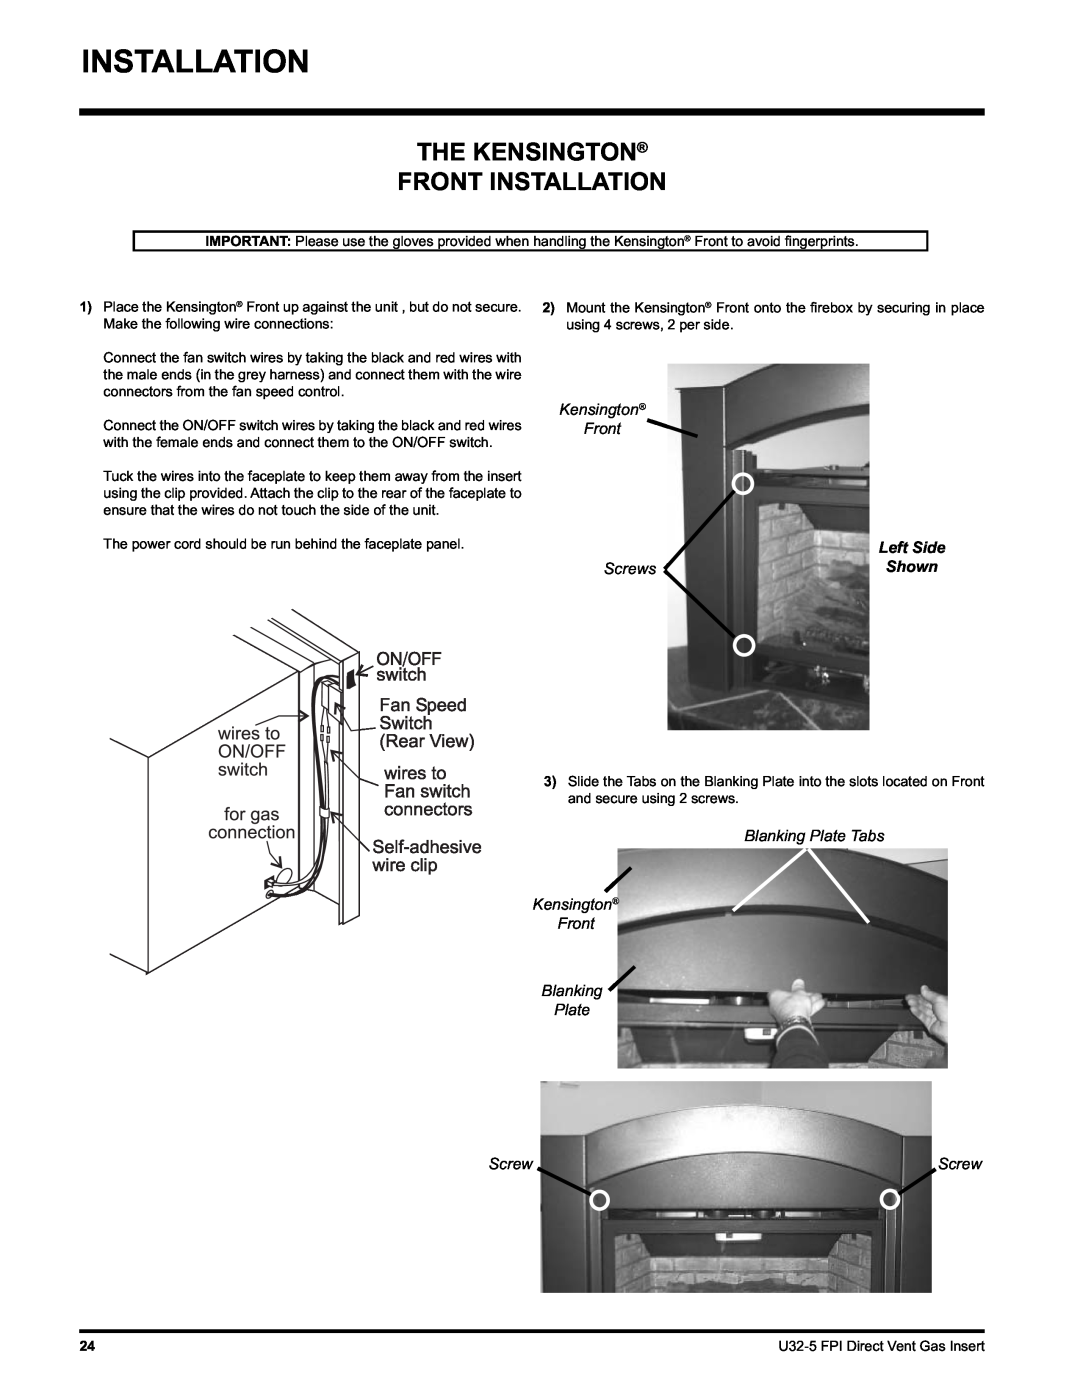 Hampton Direct U32 installation manual The Kensington Front Installation, Left Side, ScrewsShown, Plate 